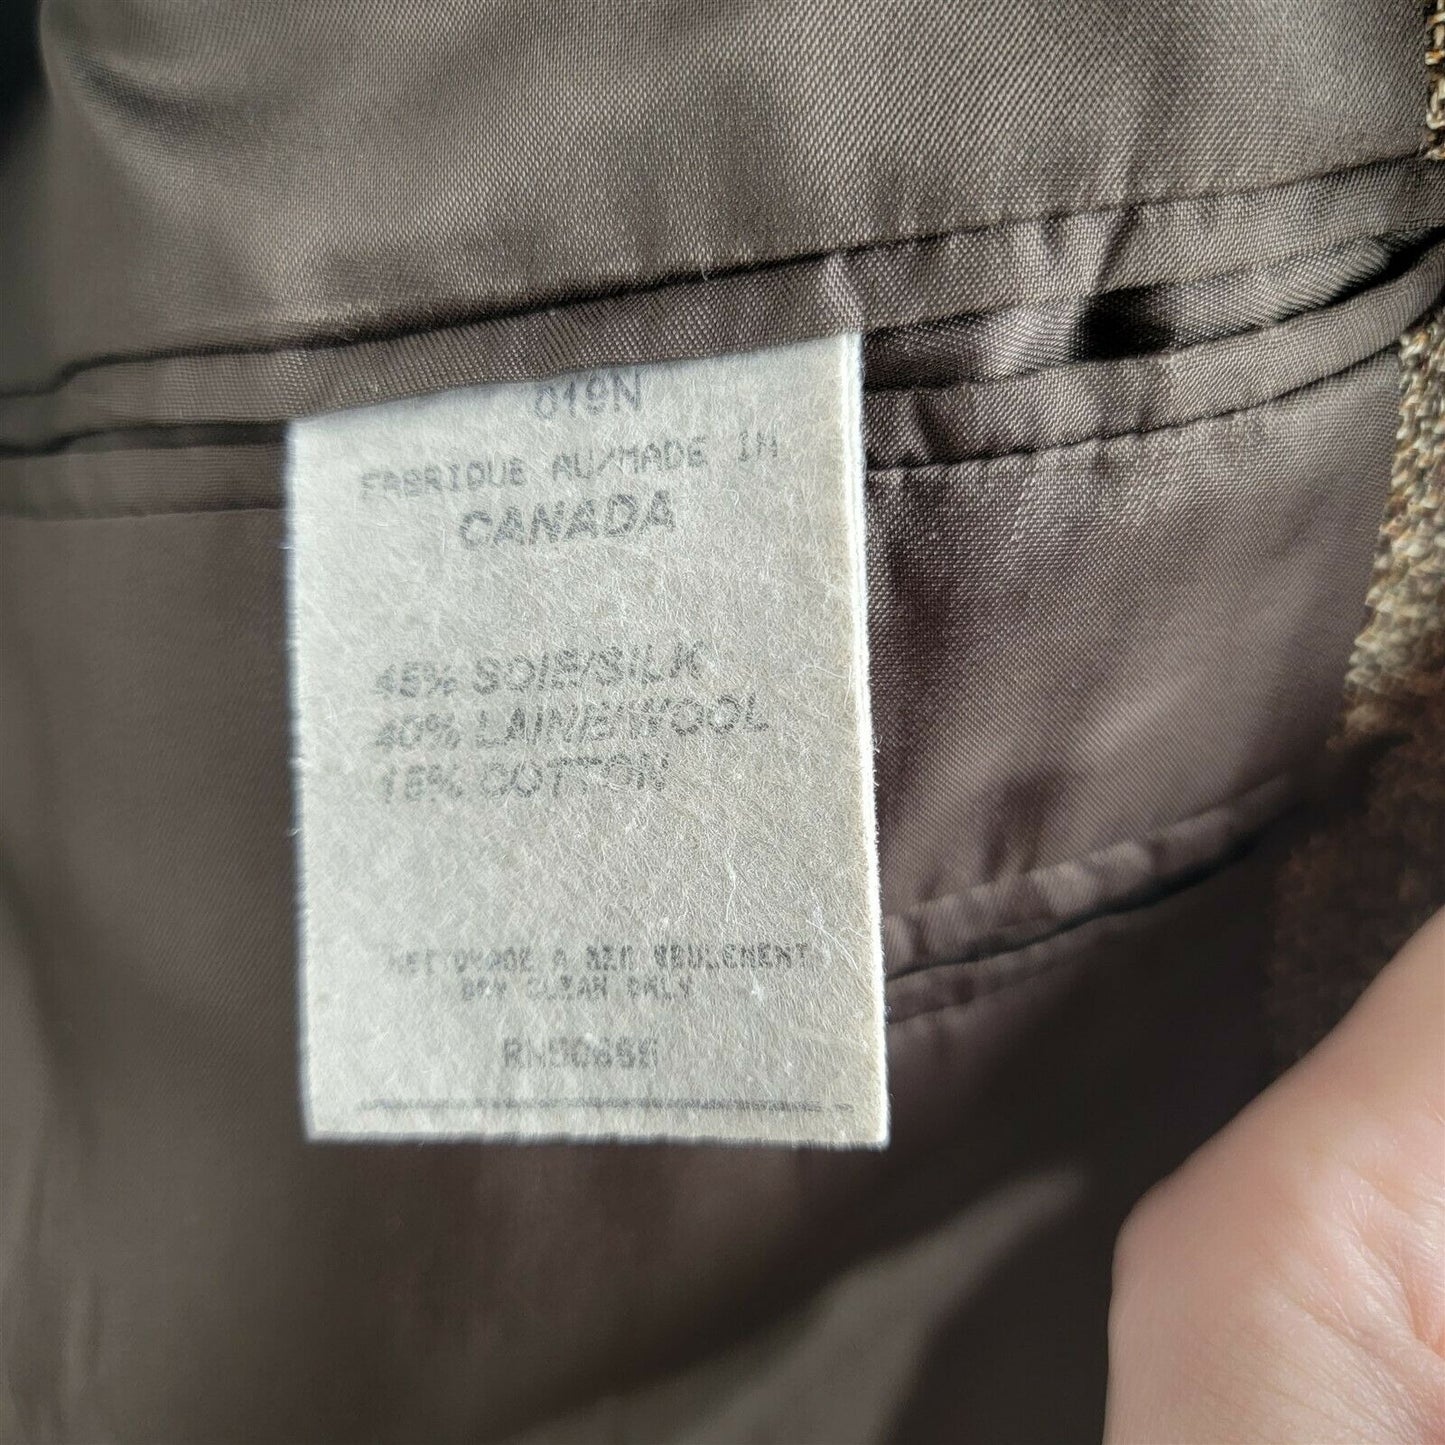 Arnold Brant Wool Silk Blazer Suit Coat Sports Jacket Mens - See Measurement